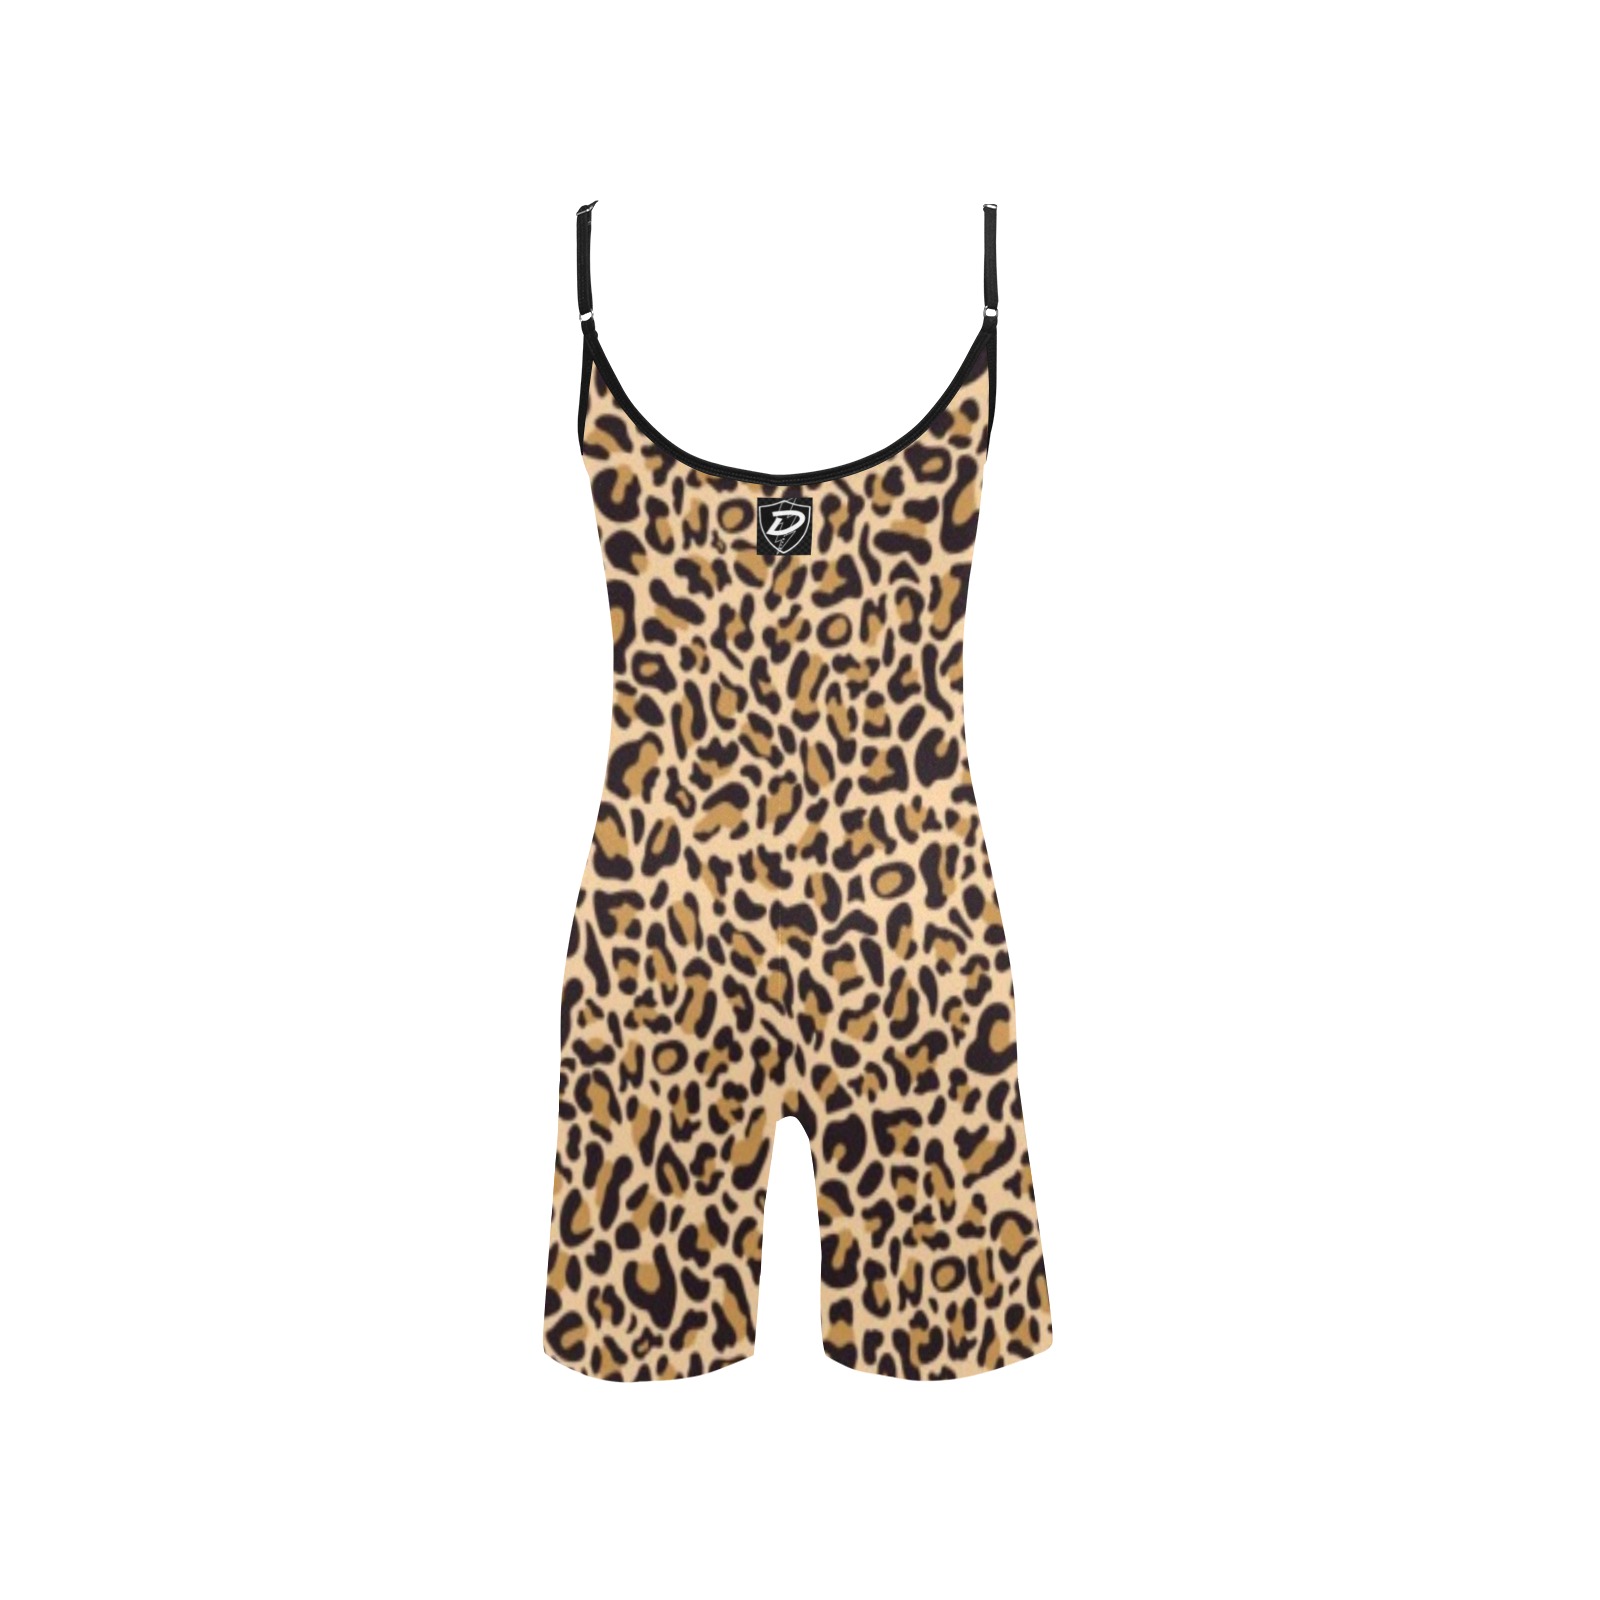 DIONIO Clothing - Women's Short Yoga Bodysuit (Cheetah) Women's Short Yoga Bodysuit